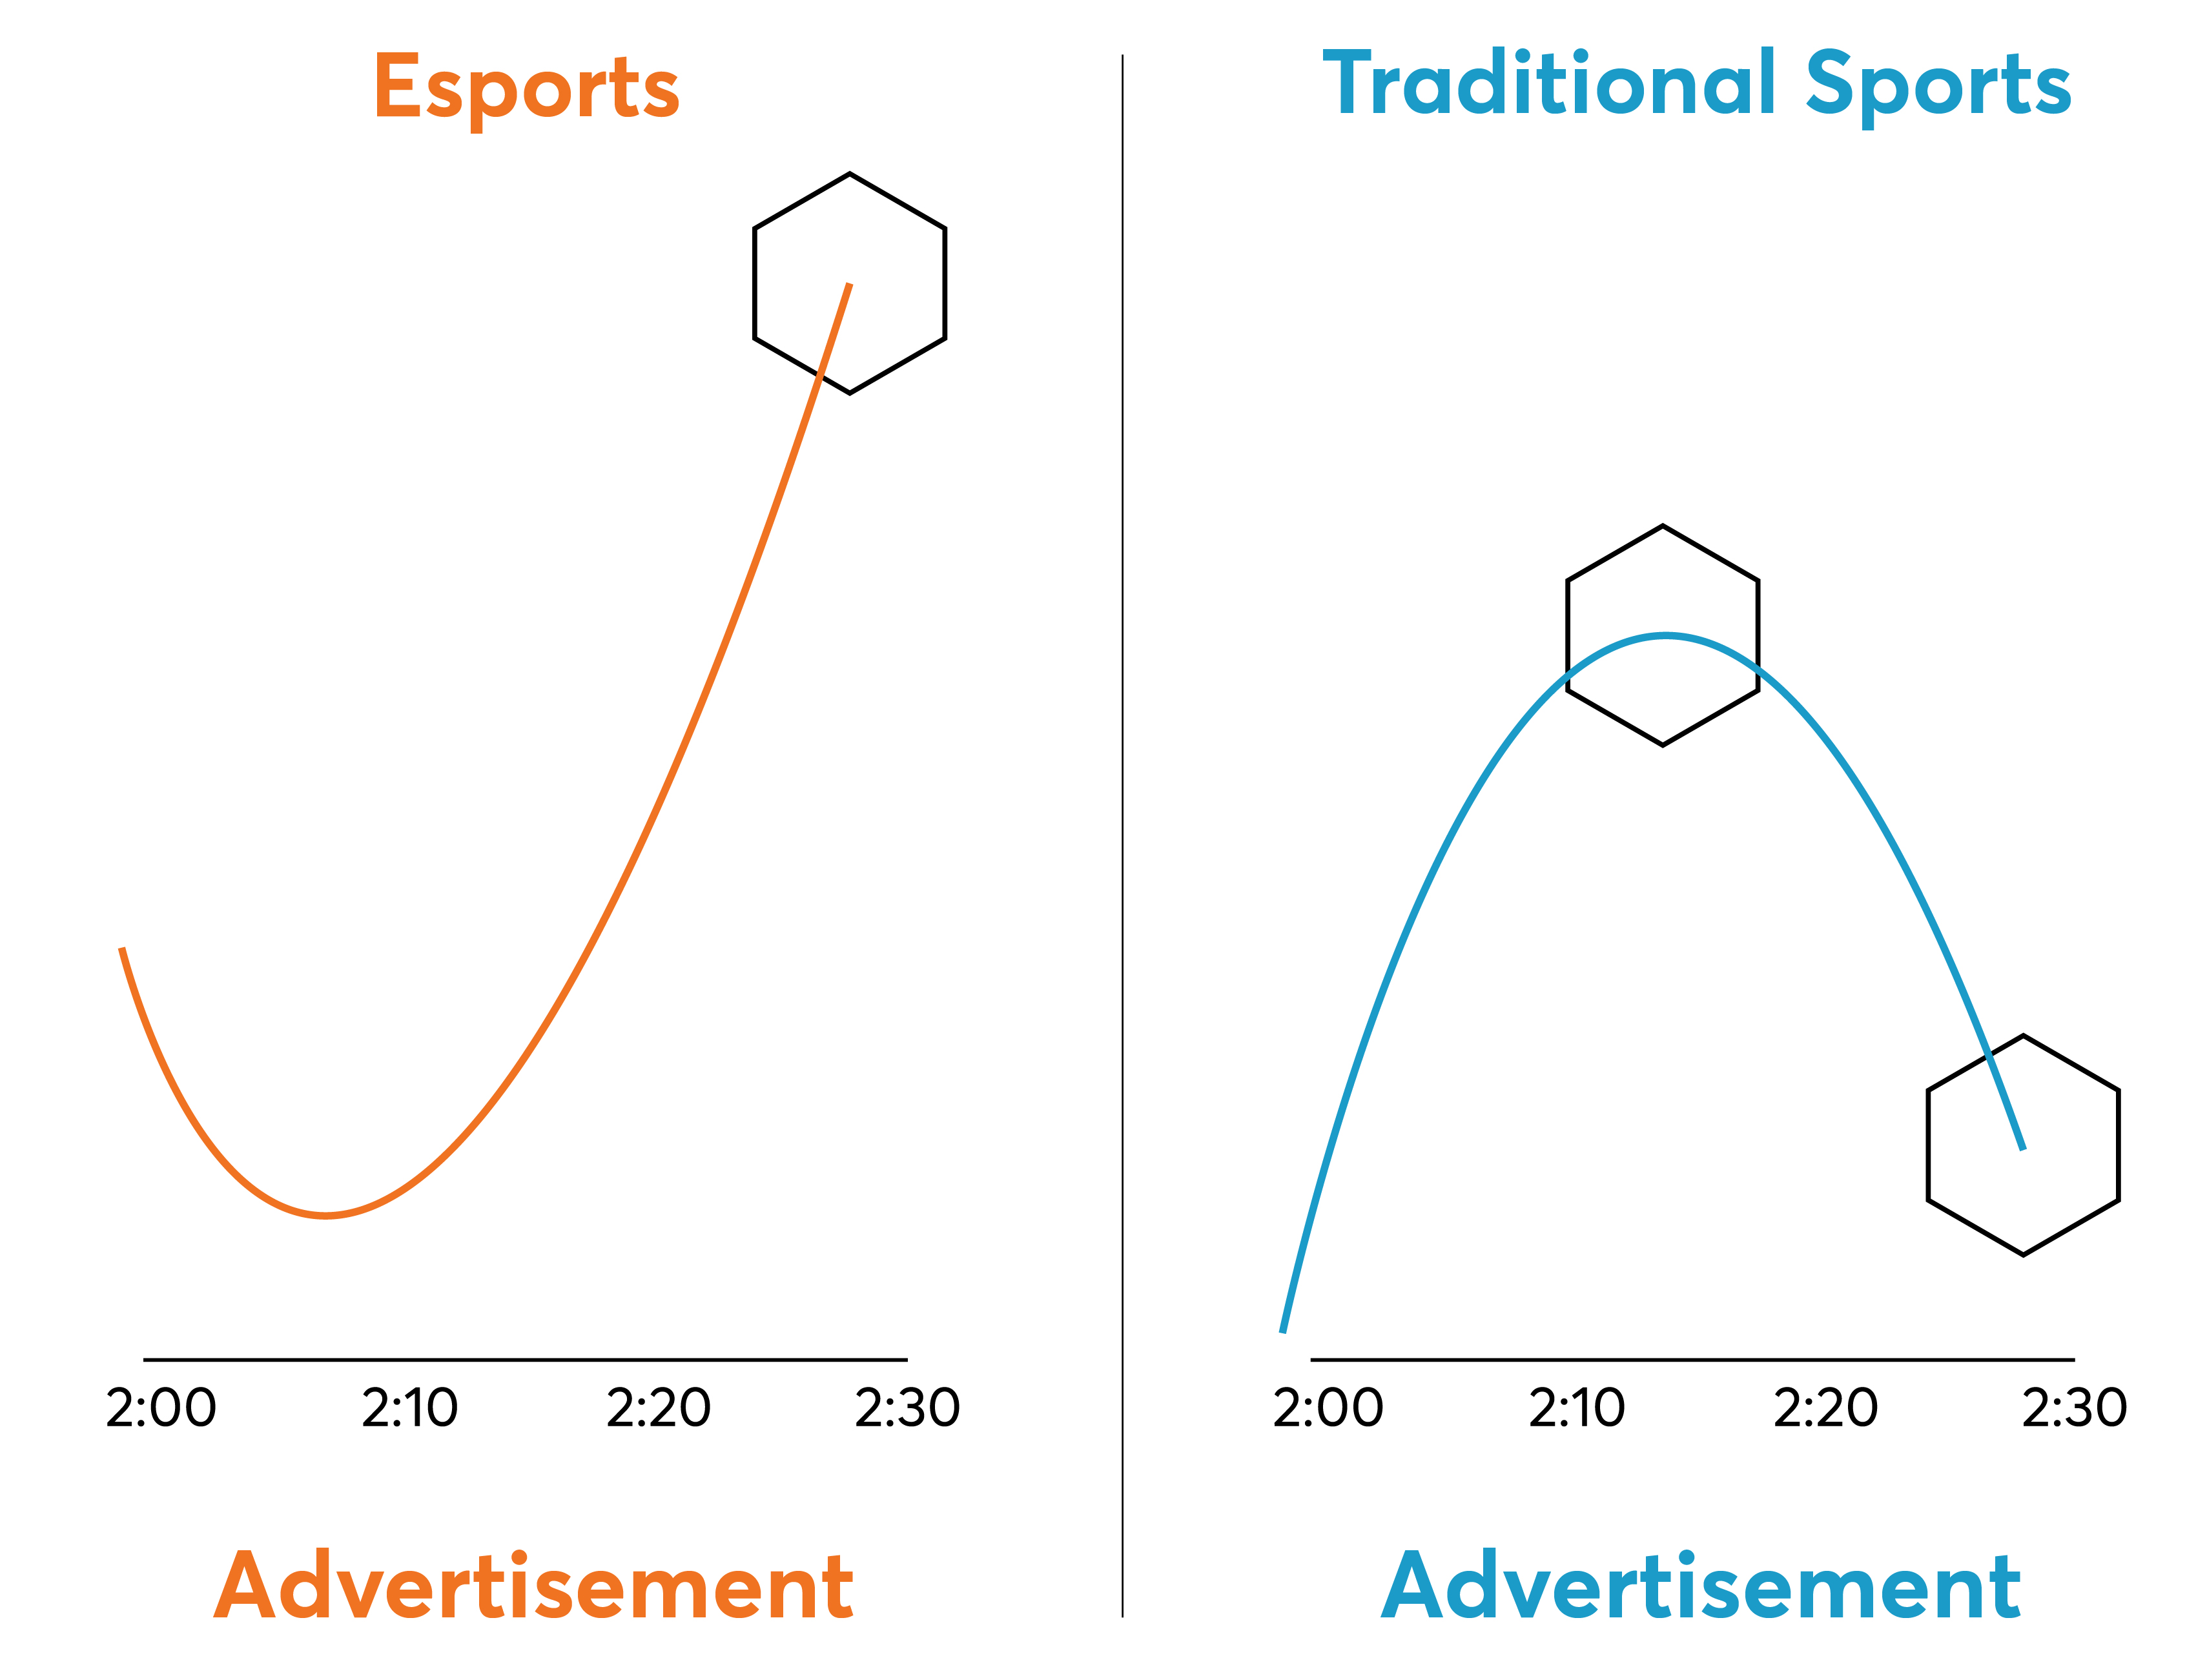 Esports vs Traditional Sports ad performance comparison 